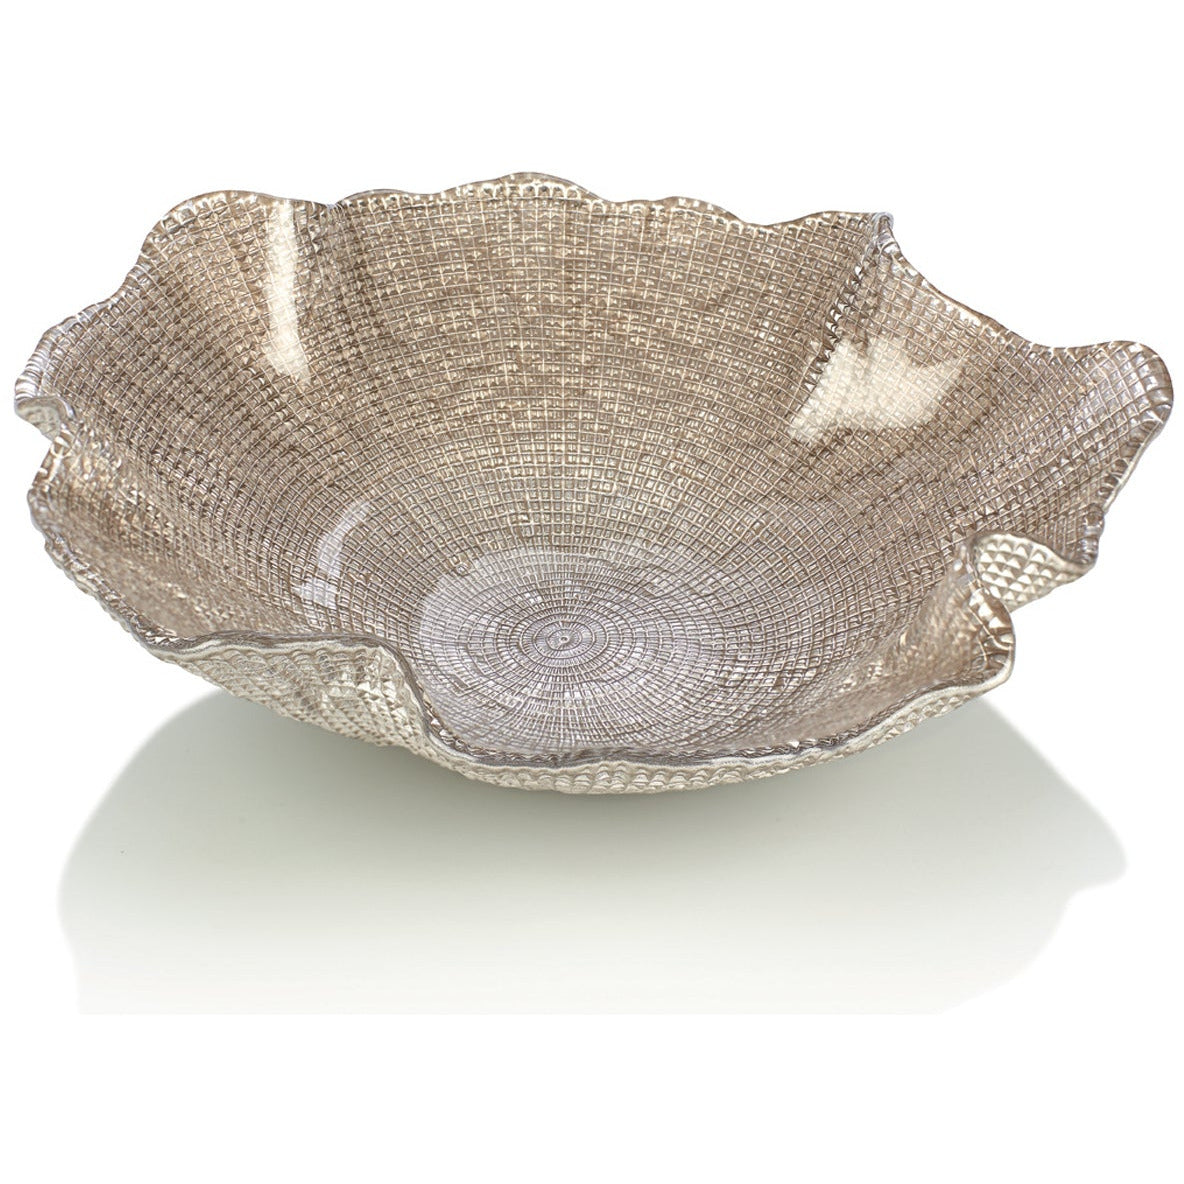 Scalloped Iridescent Glass Bowl